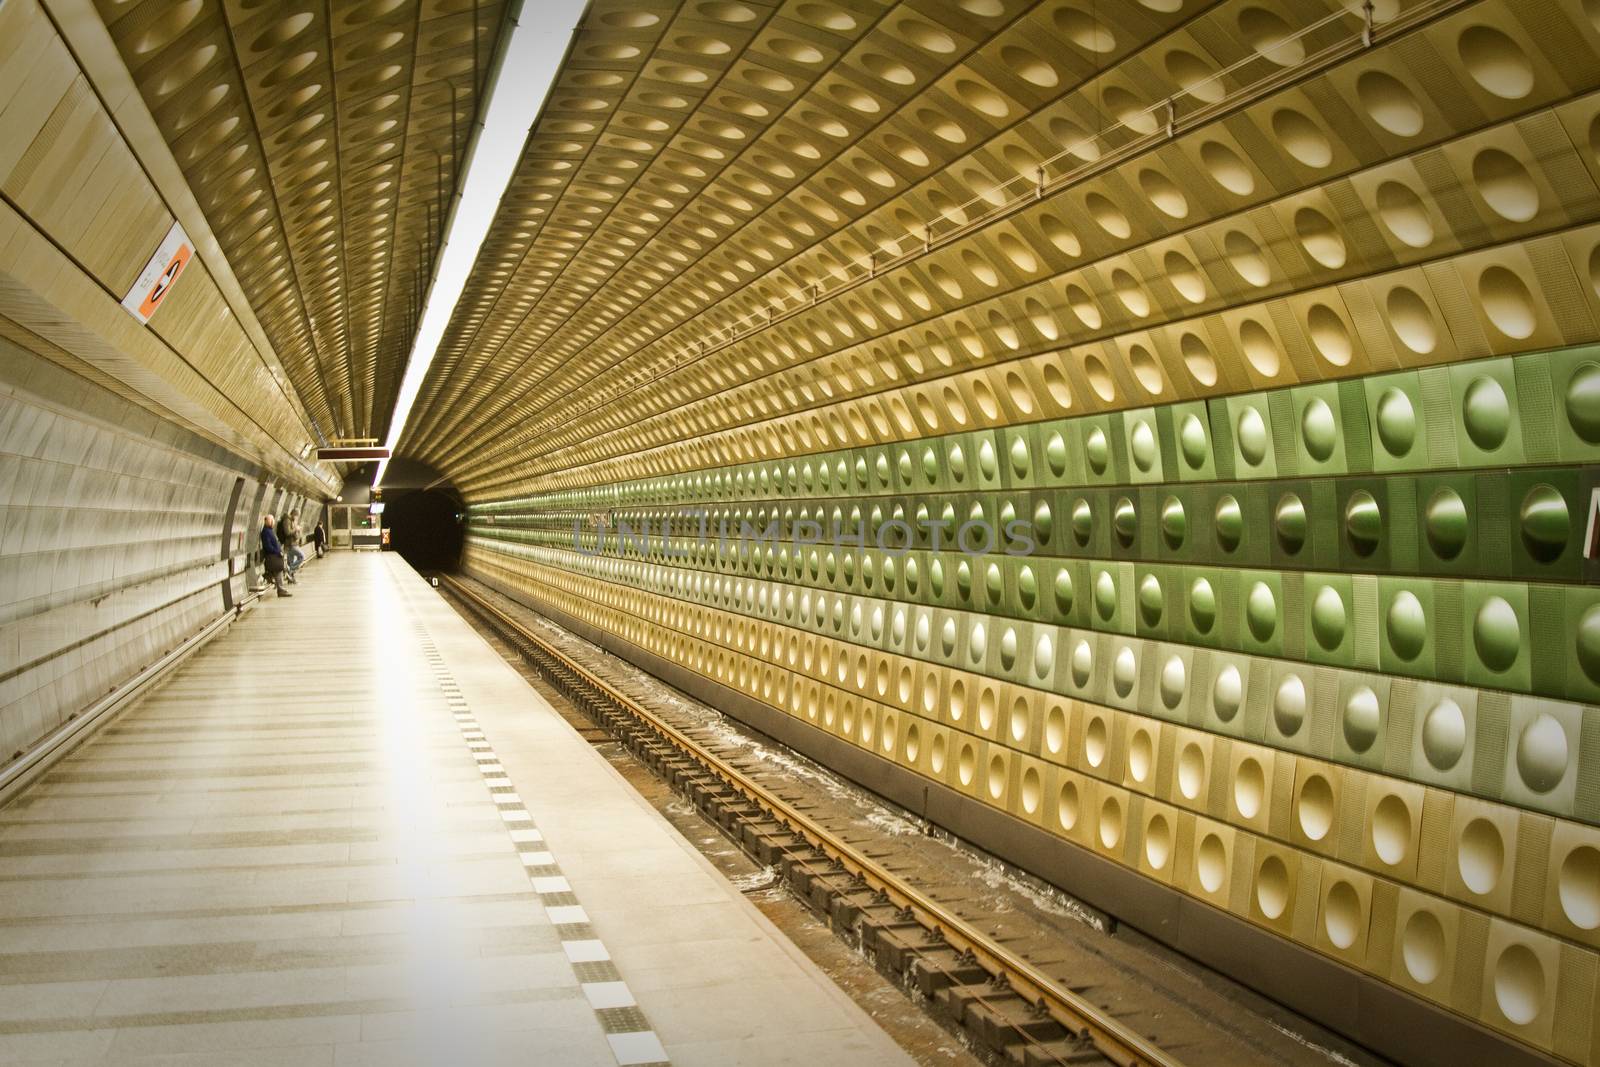 Underground Train Station by samULvisuals